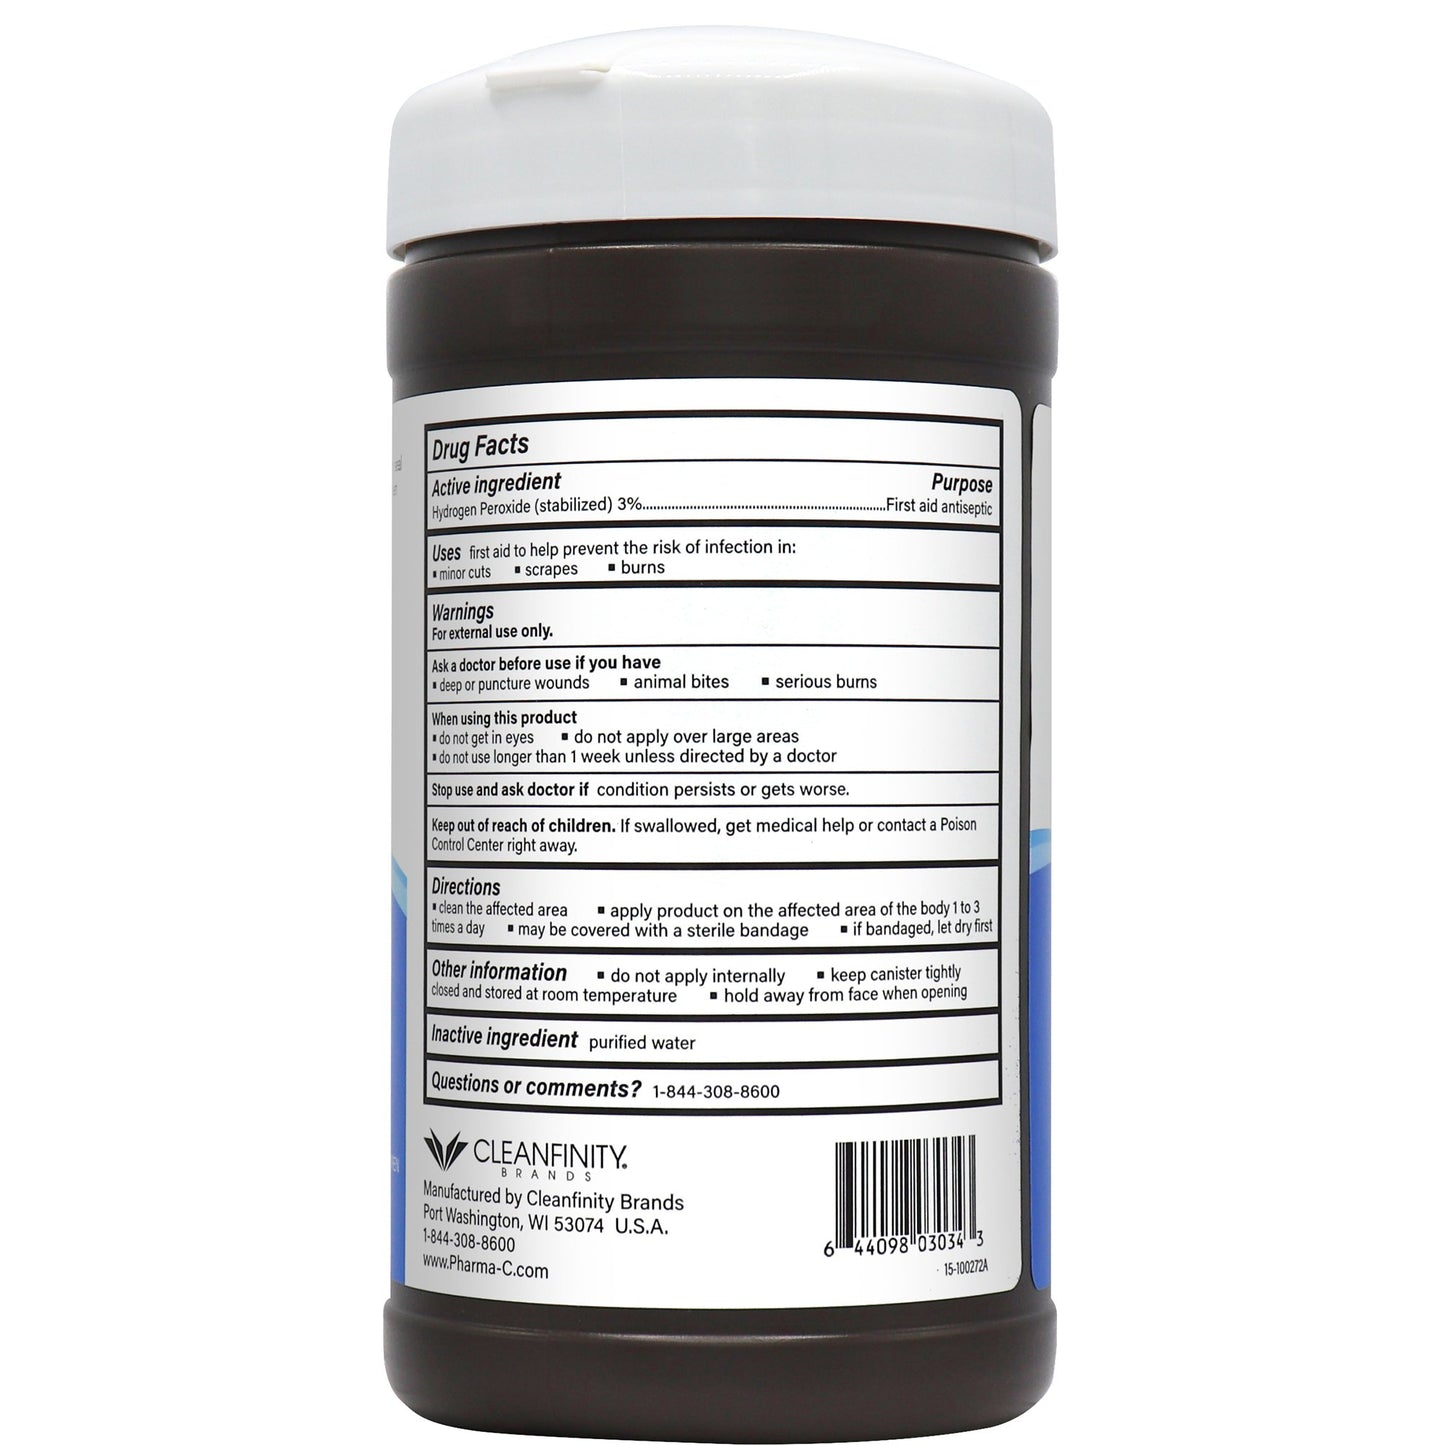 Pharma-C-Wipes® Hydrogen Peroxide Antiseptic